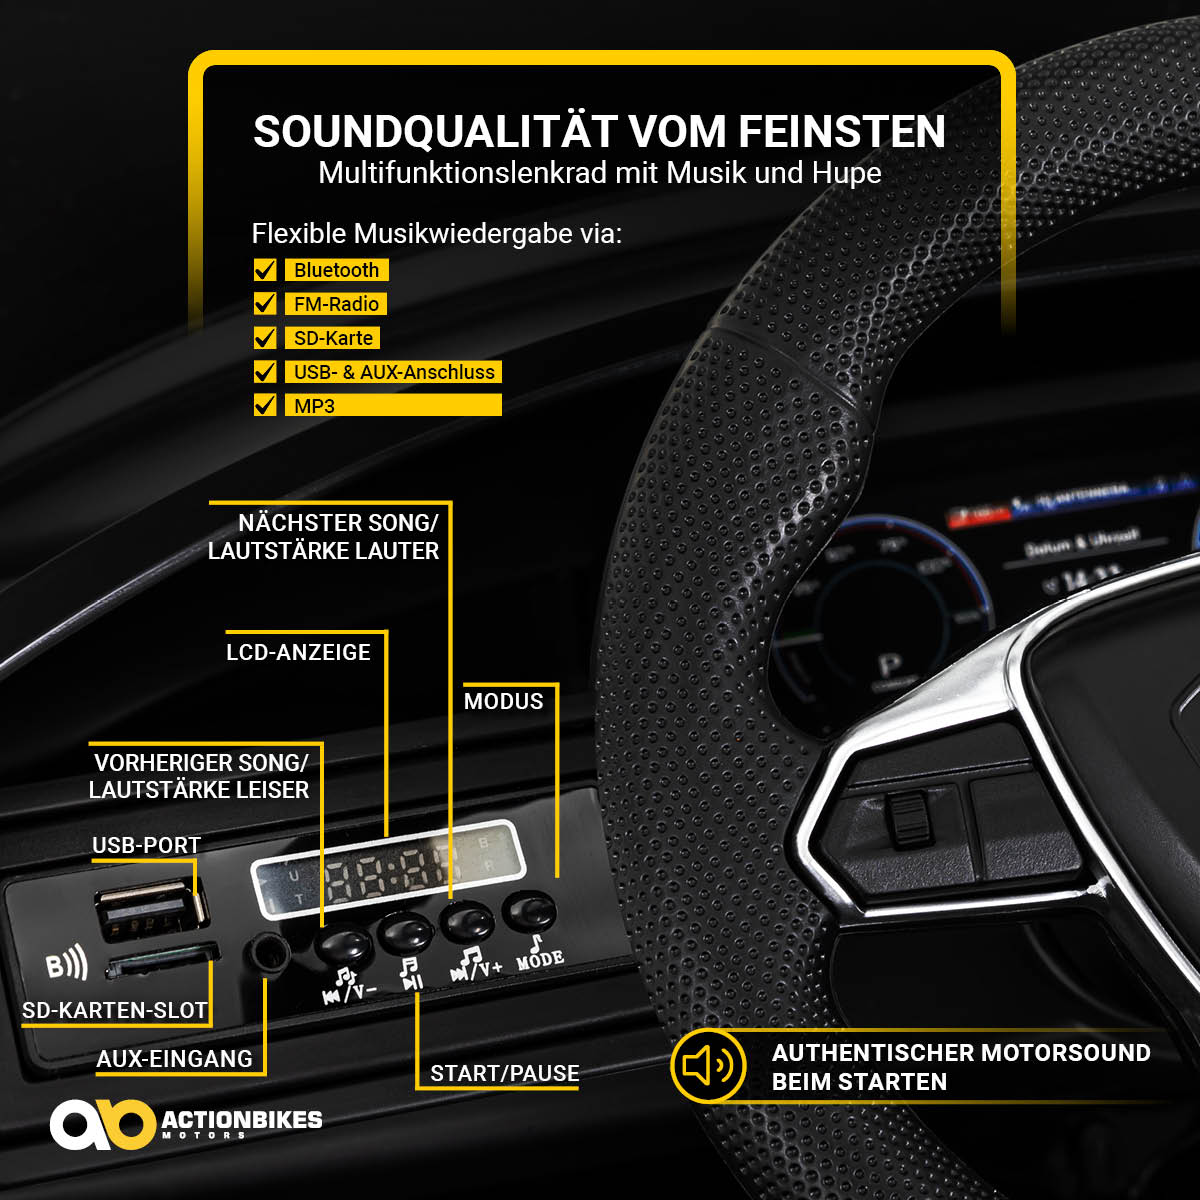 e-tron GT Audi ACTIONBIKES RS Kinderauto MOTORS